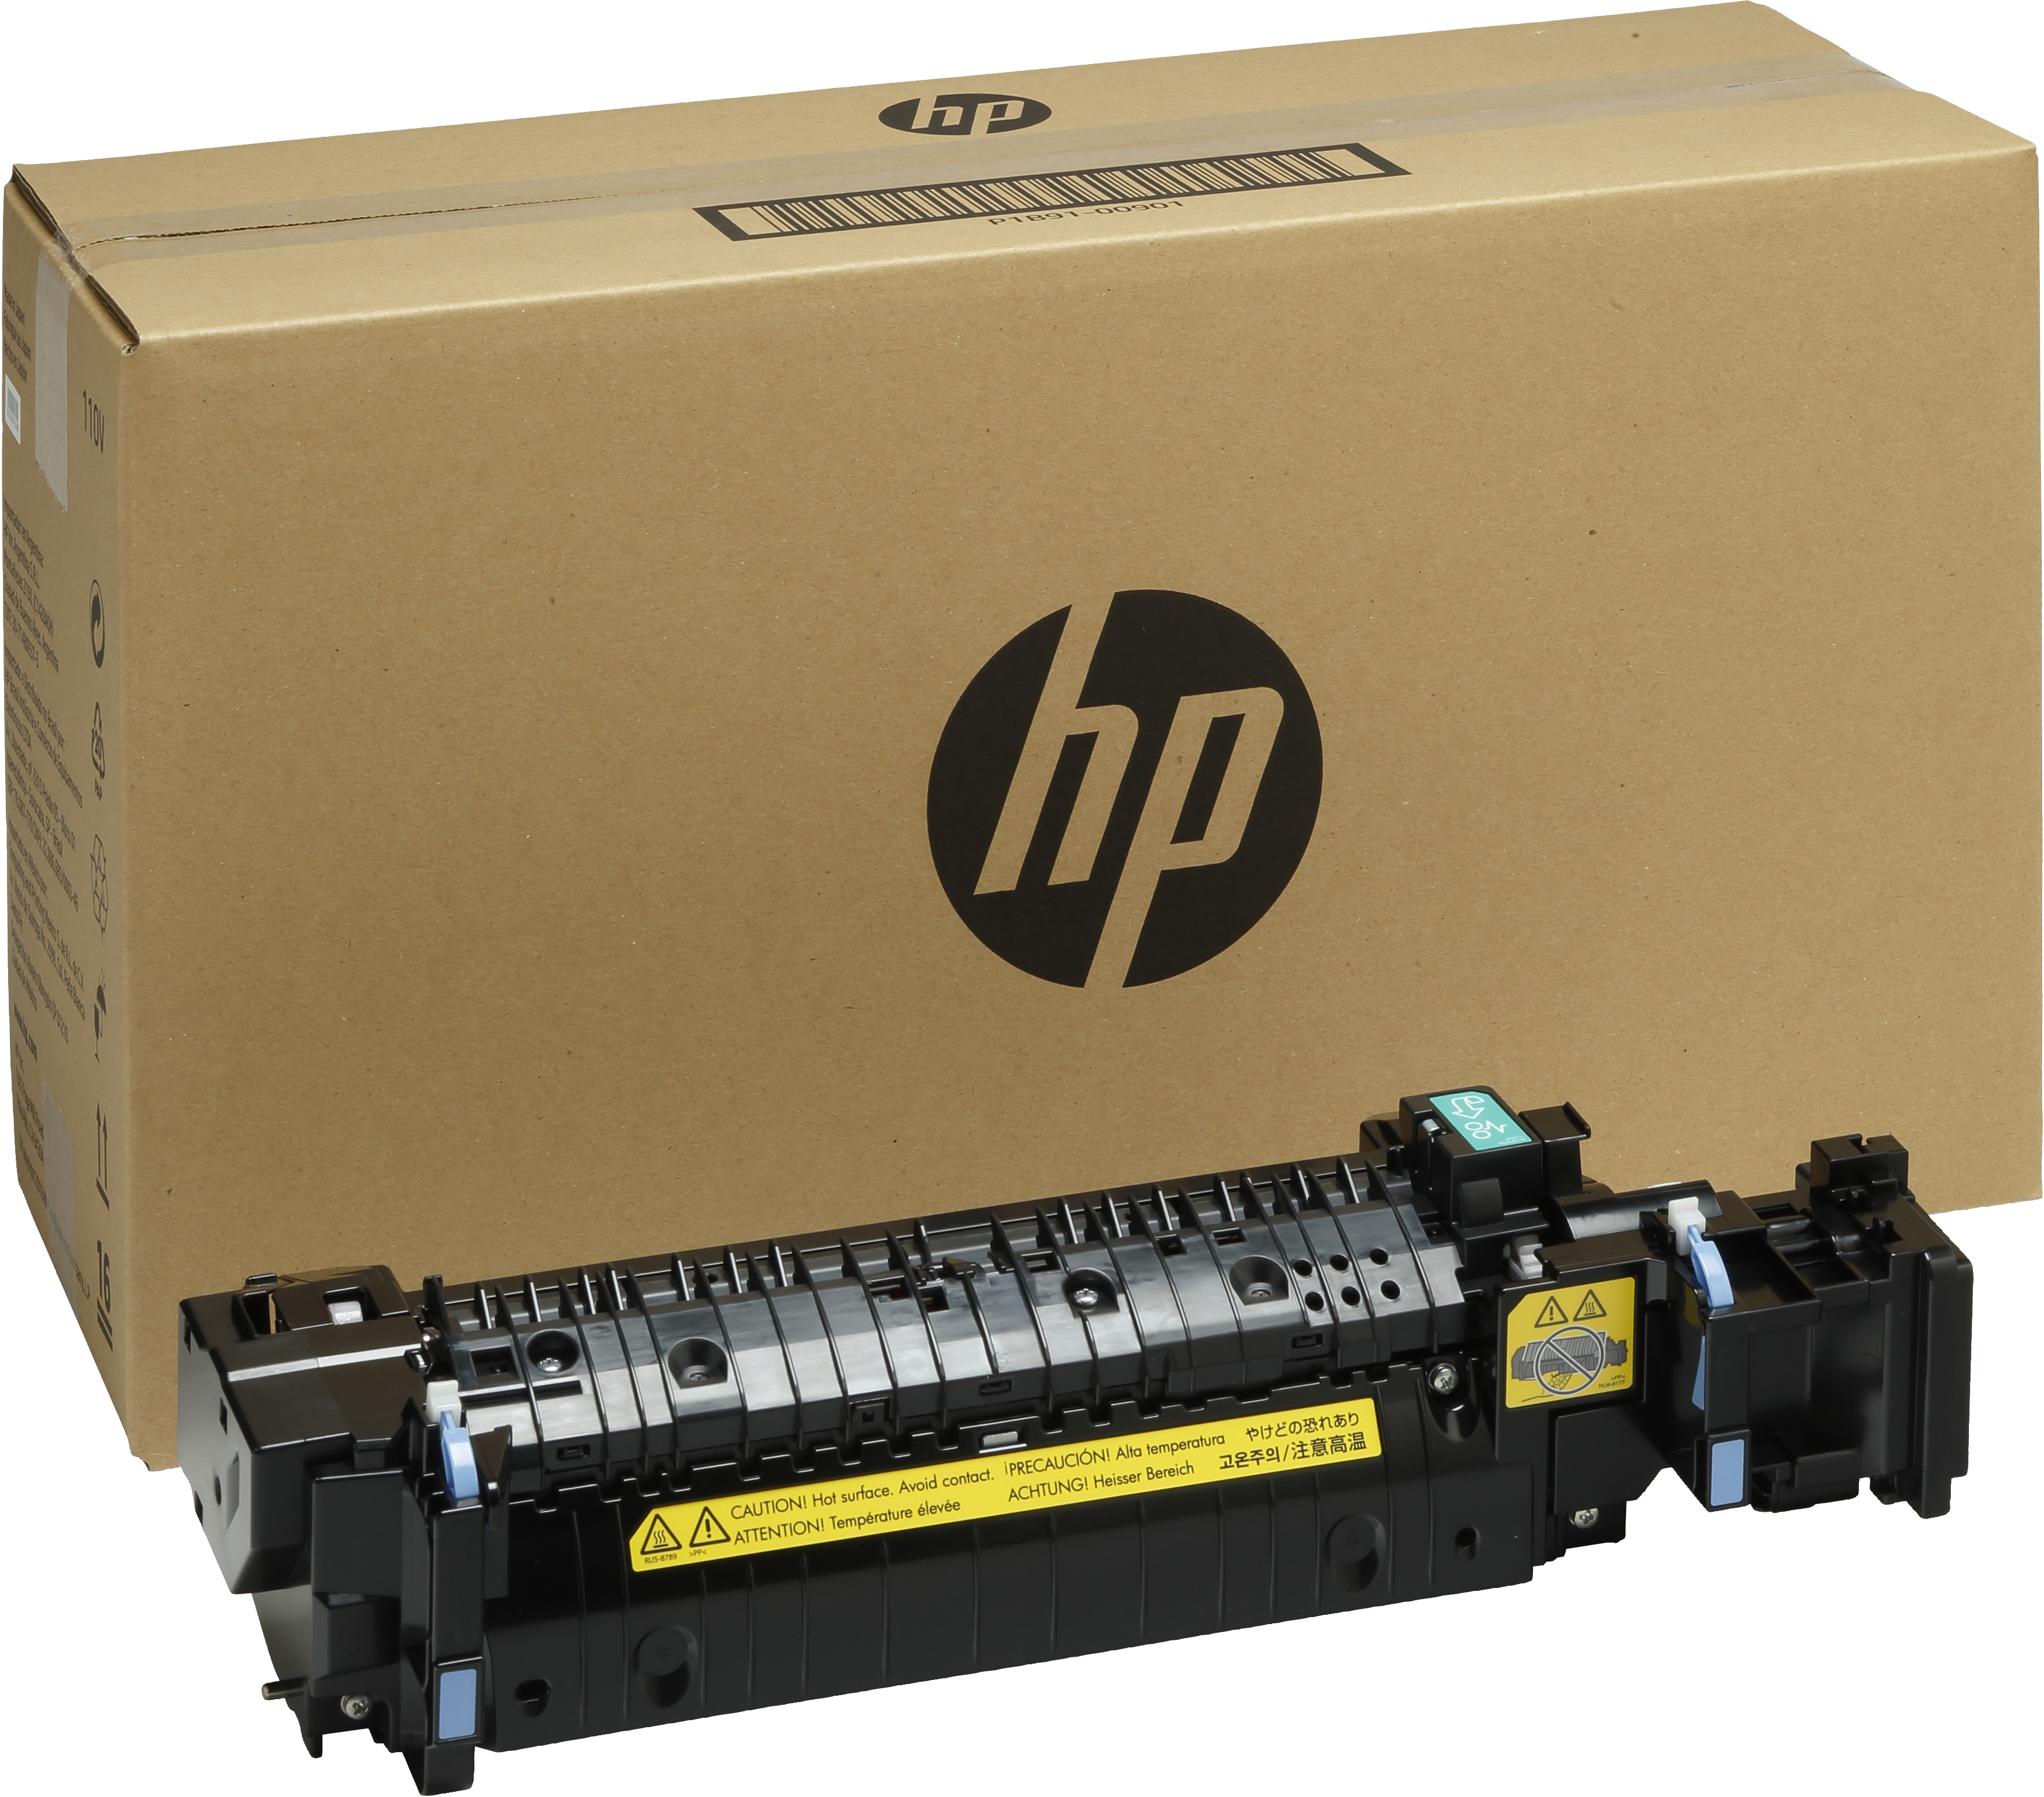 HP  (110 V) - Kit für Fixiereinheit - für Color LaserJet Managed E65150, E65160